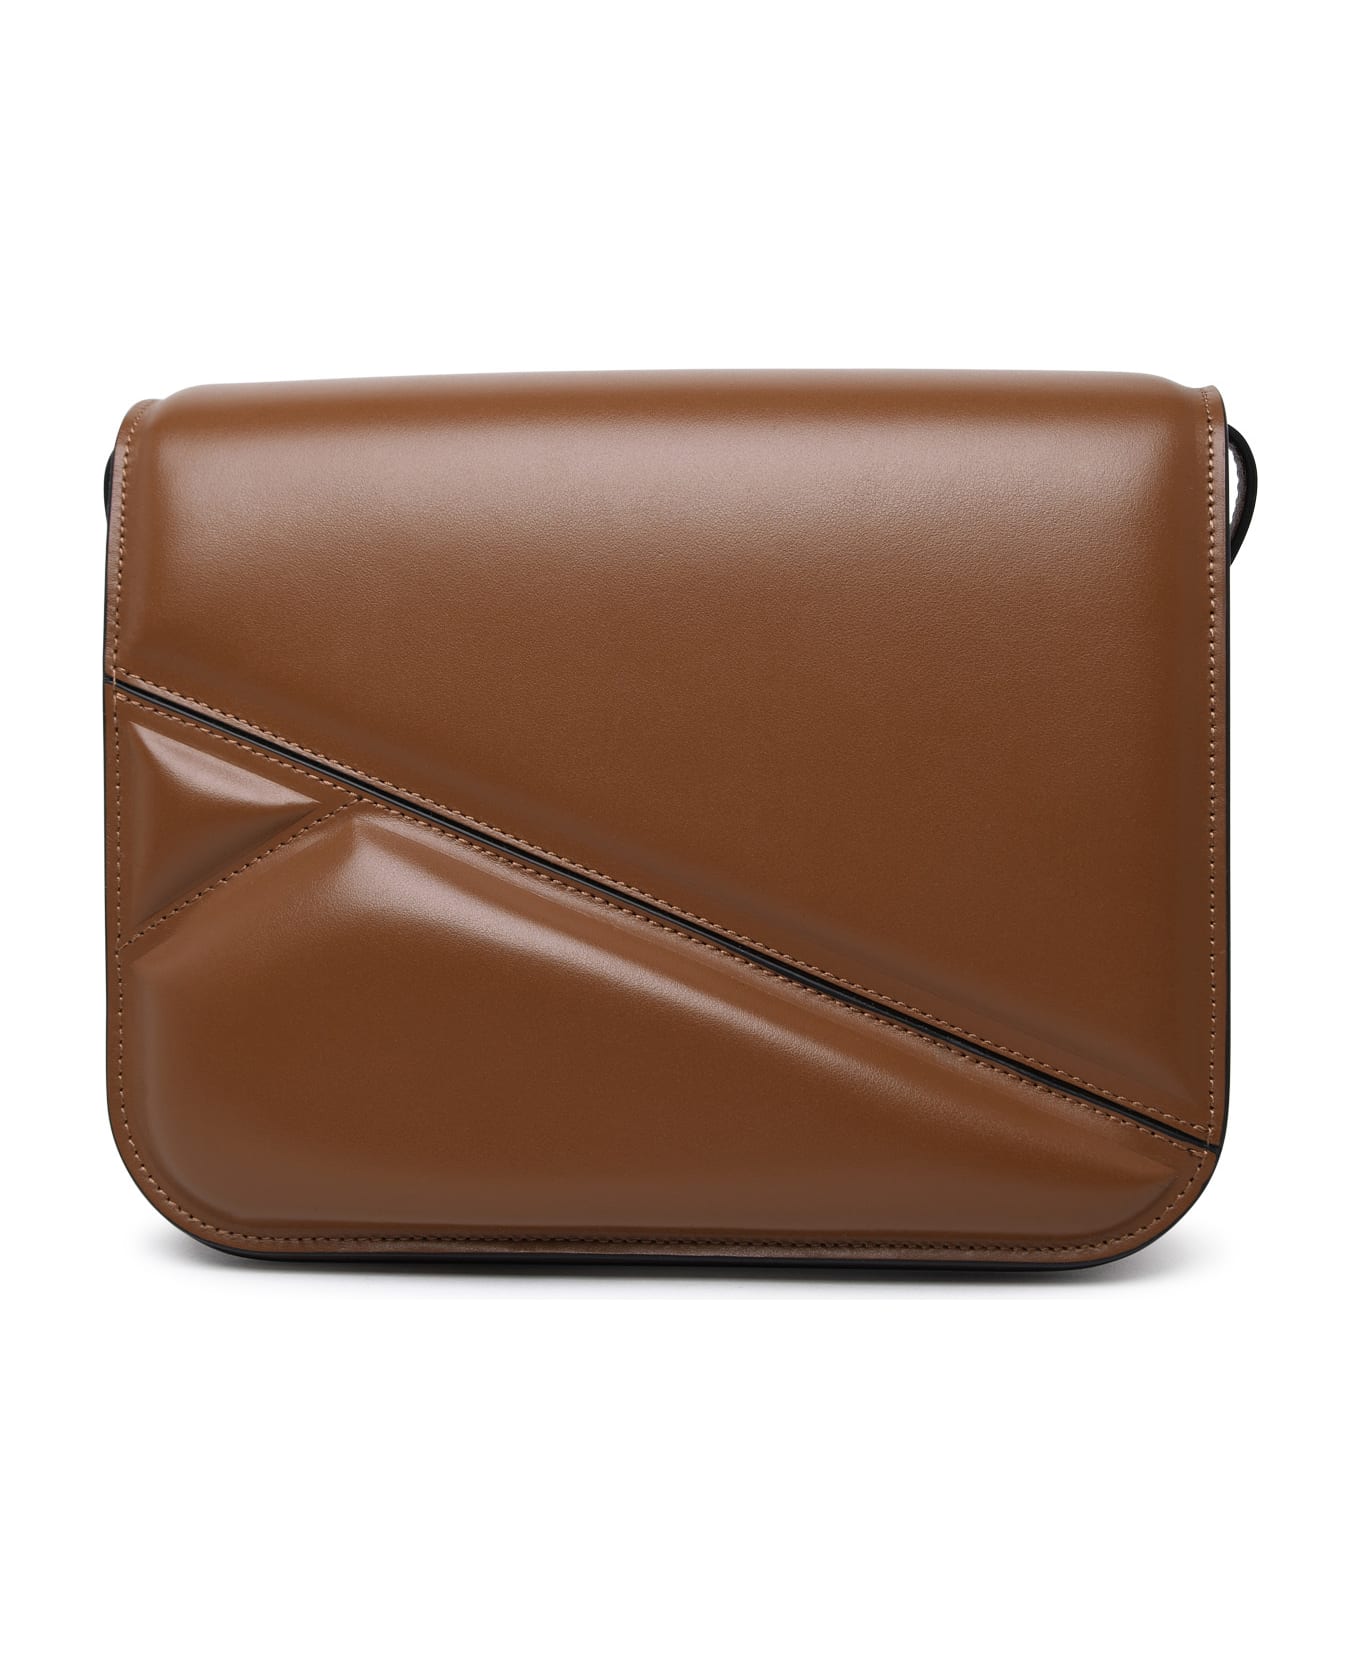 Wandler 'oscar' Brown Leather Bag - Beige